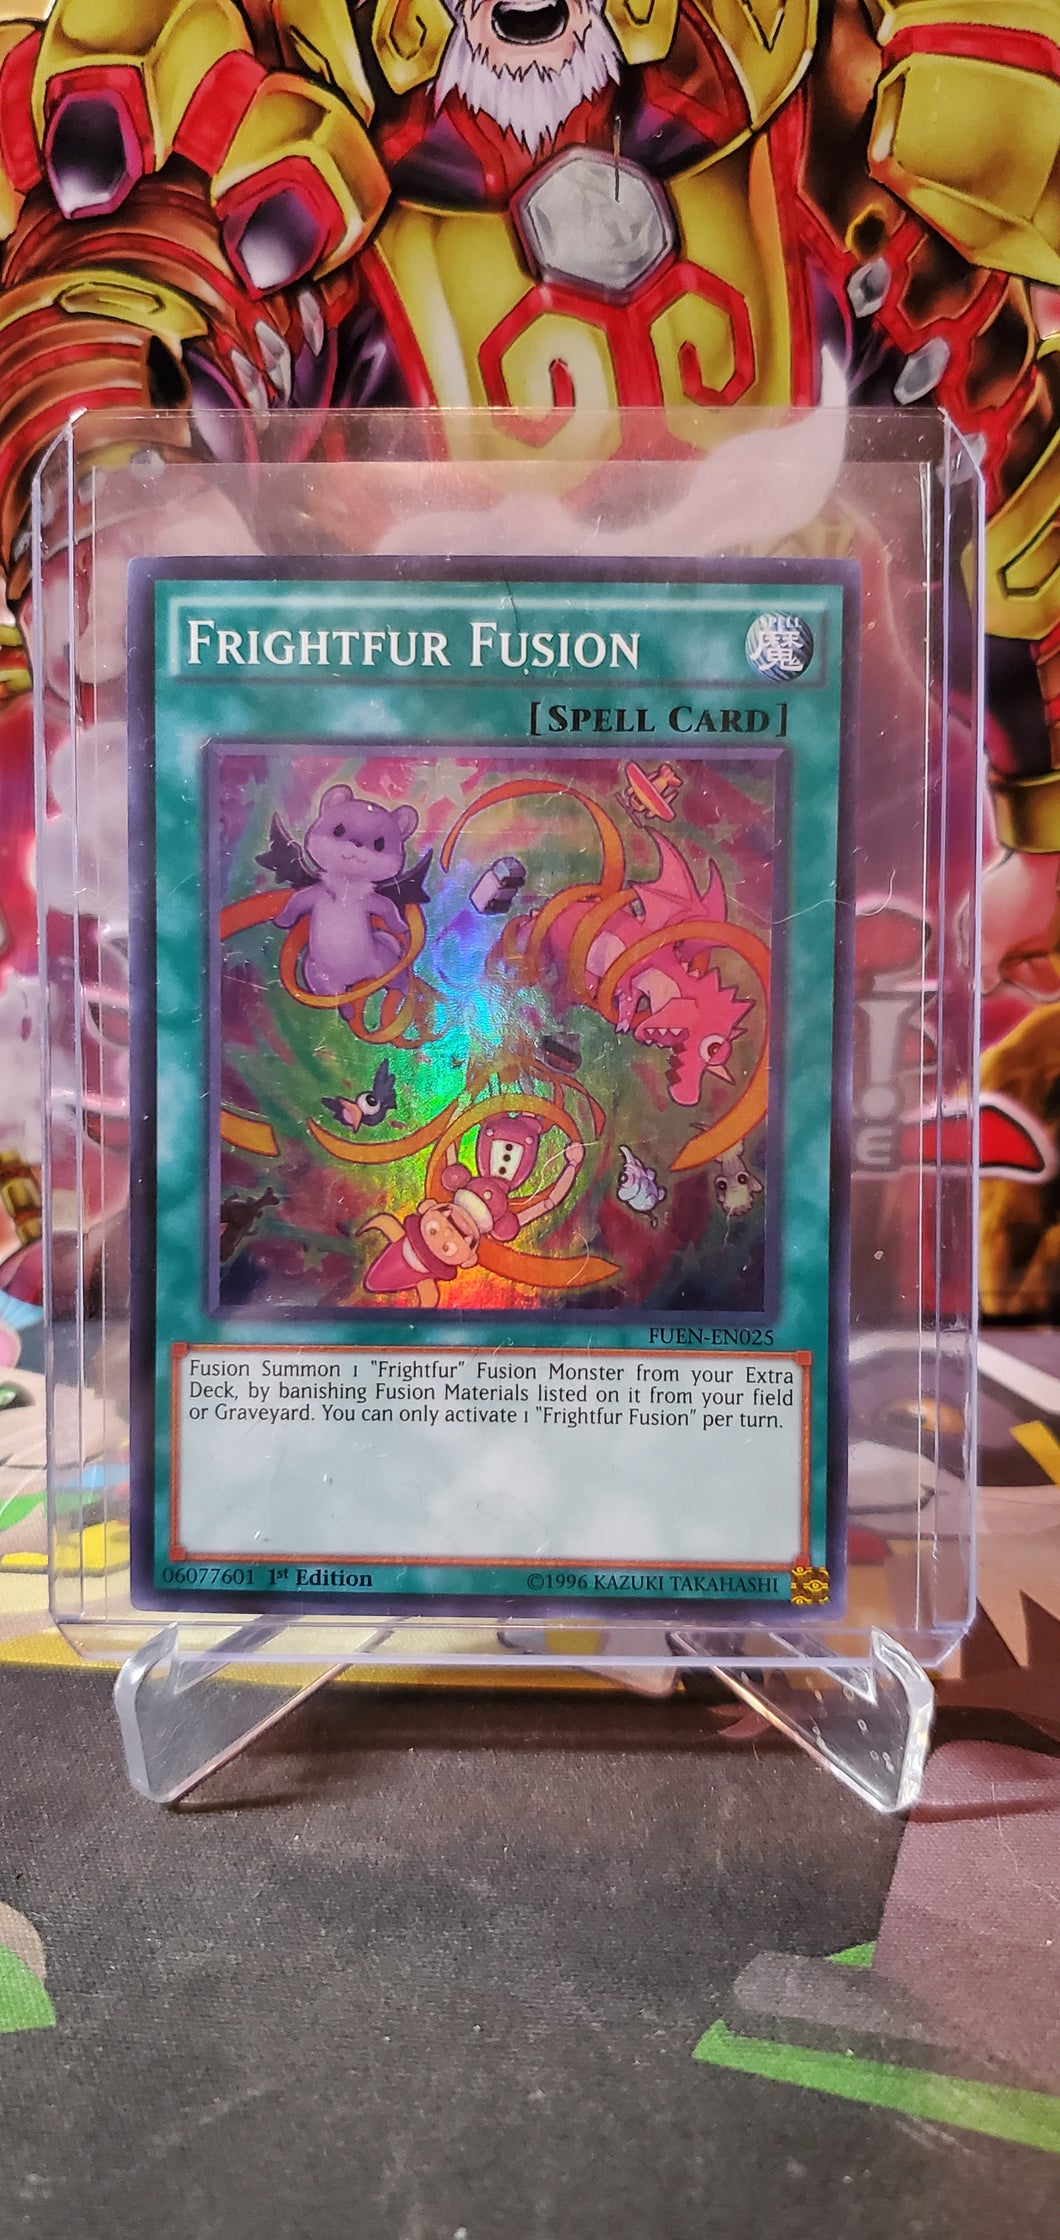 Frightfur Fusion - (1st Ed)